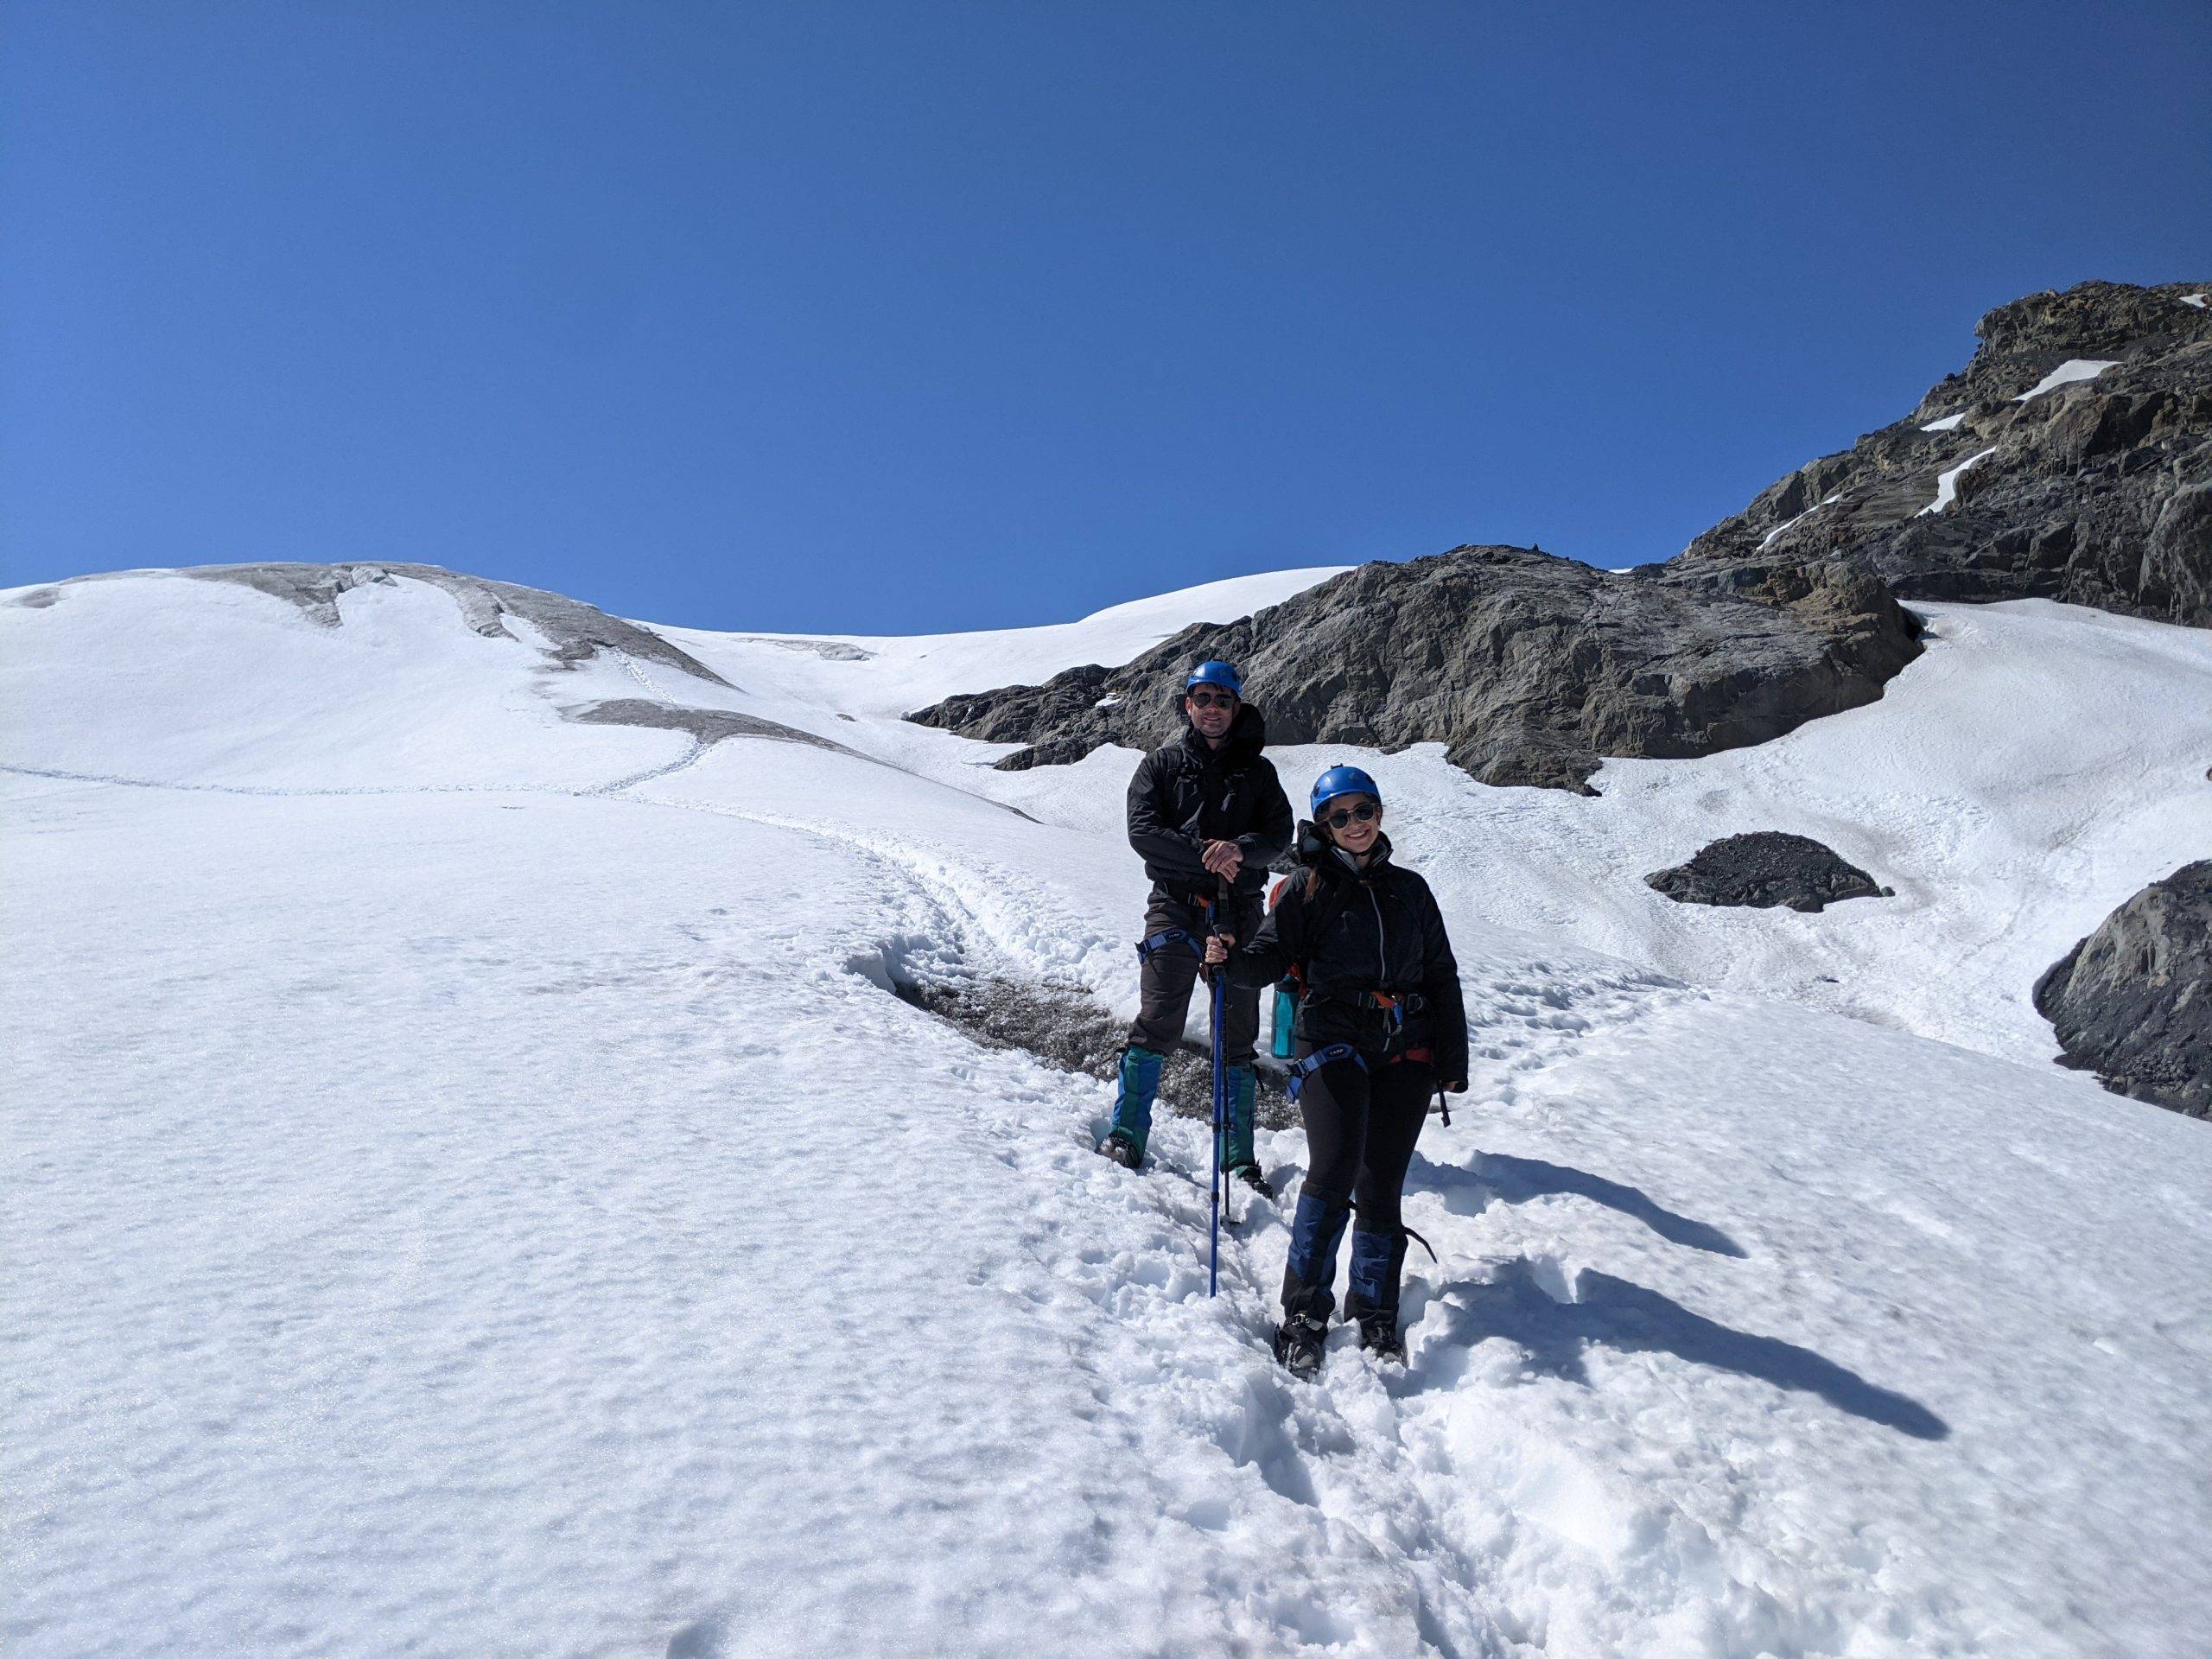 TRIP REPORT: 5/28/22 Exit Glacier Ice Hiking Adventure